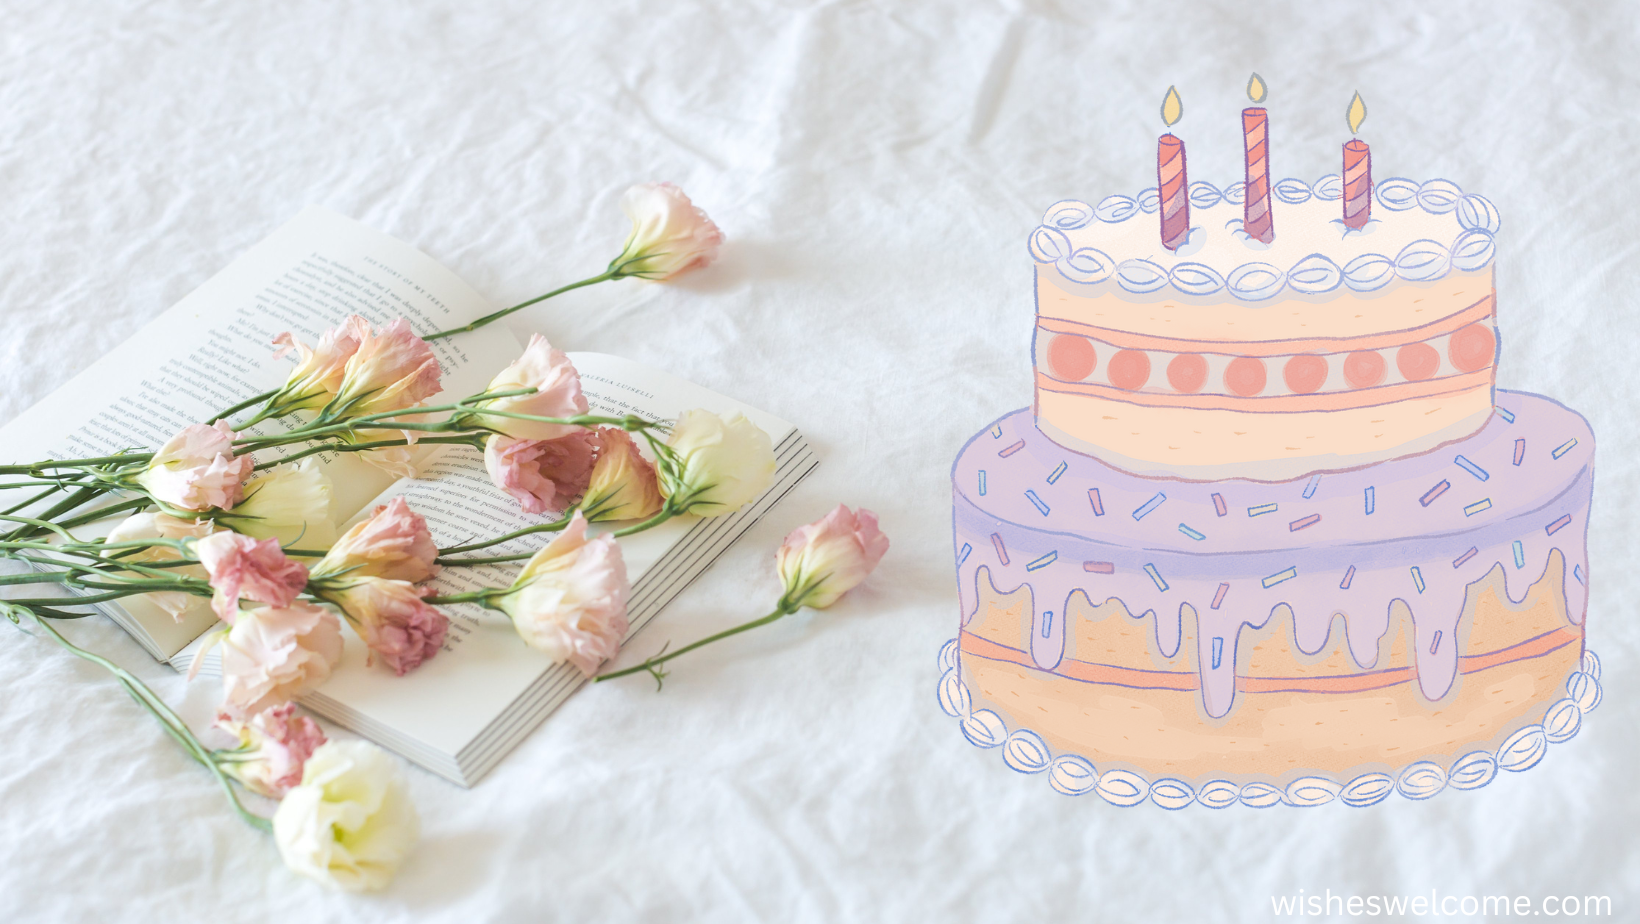 29th birthday wishes